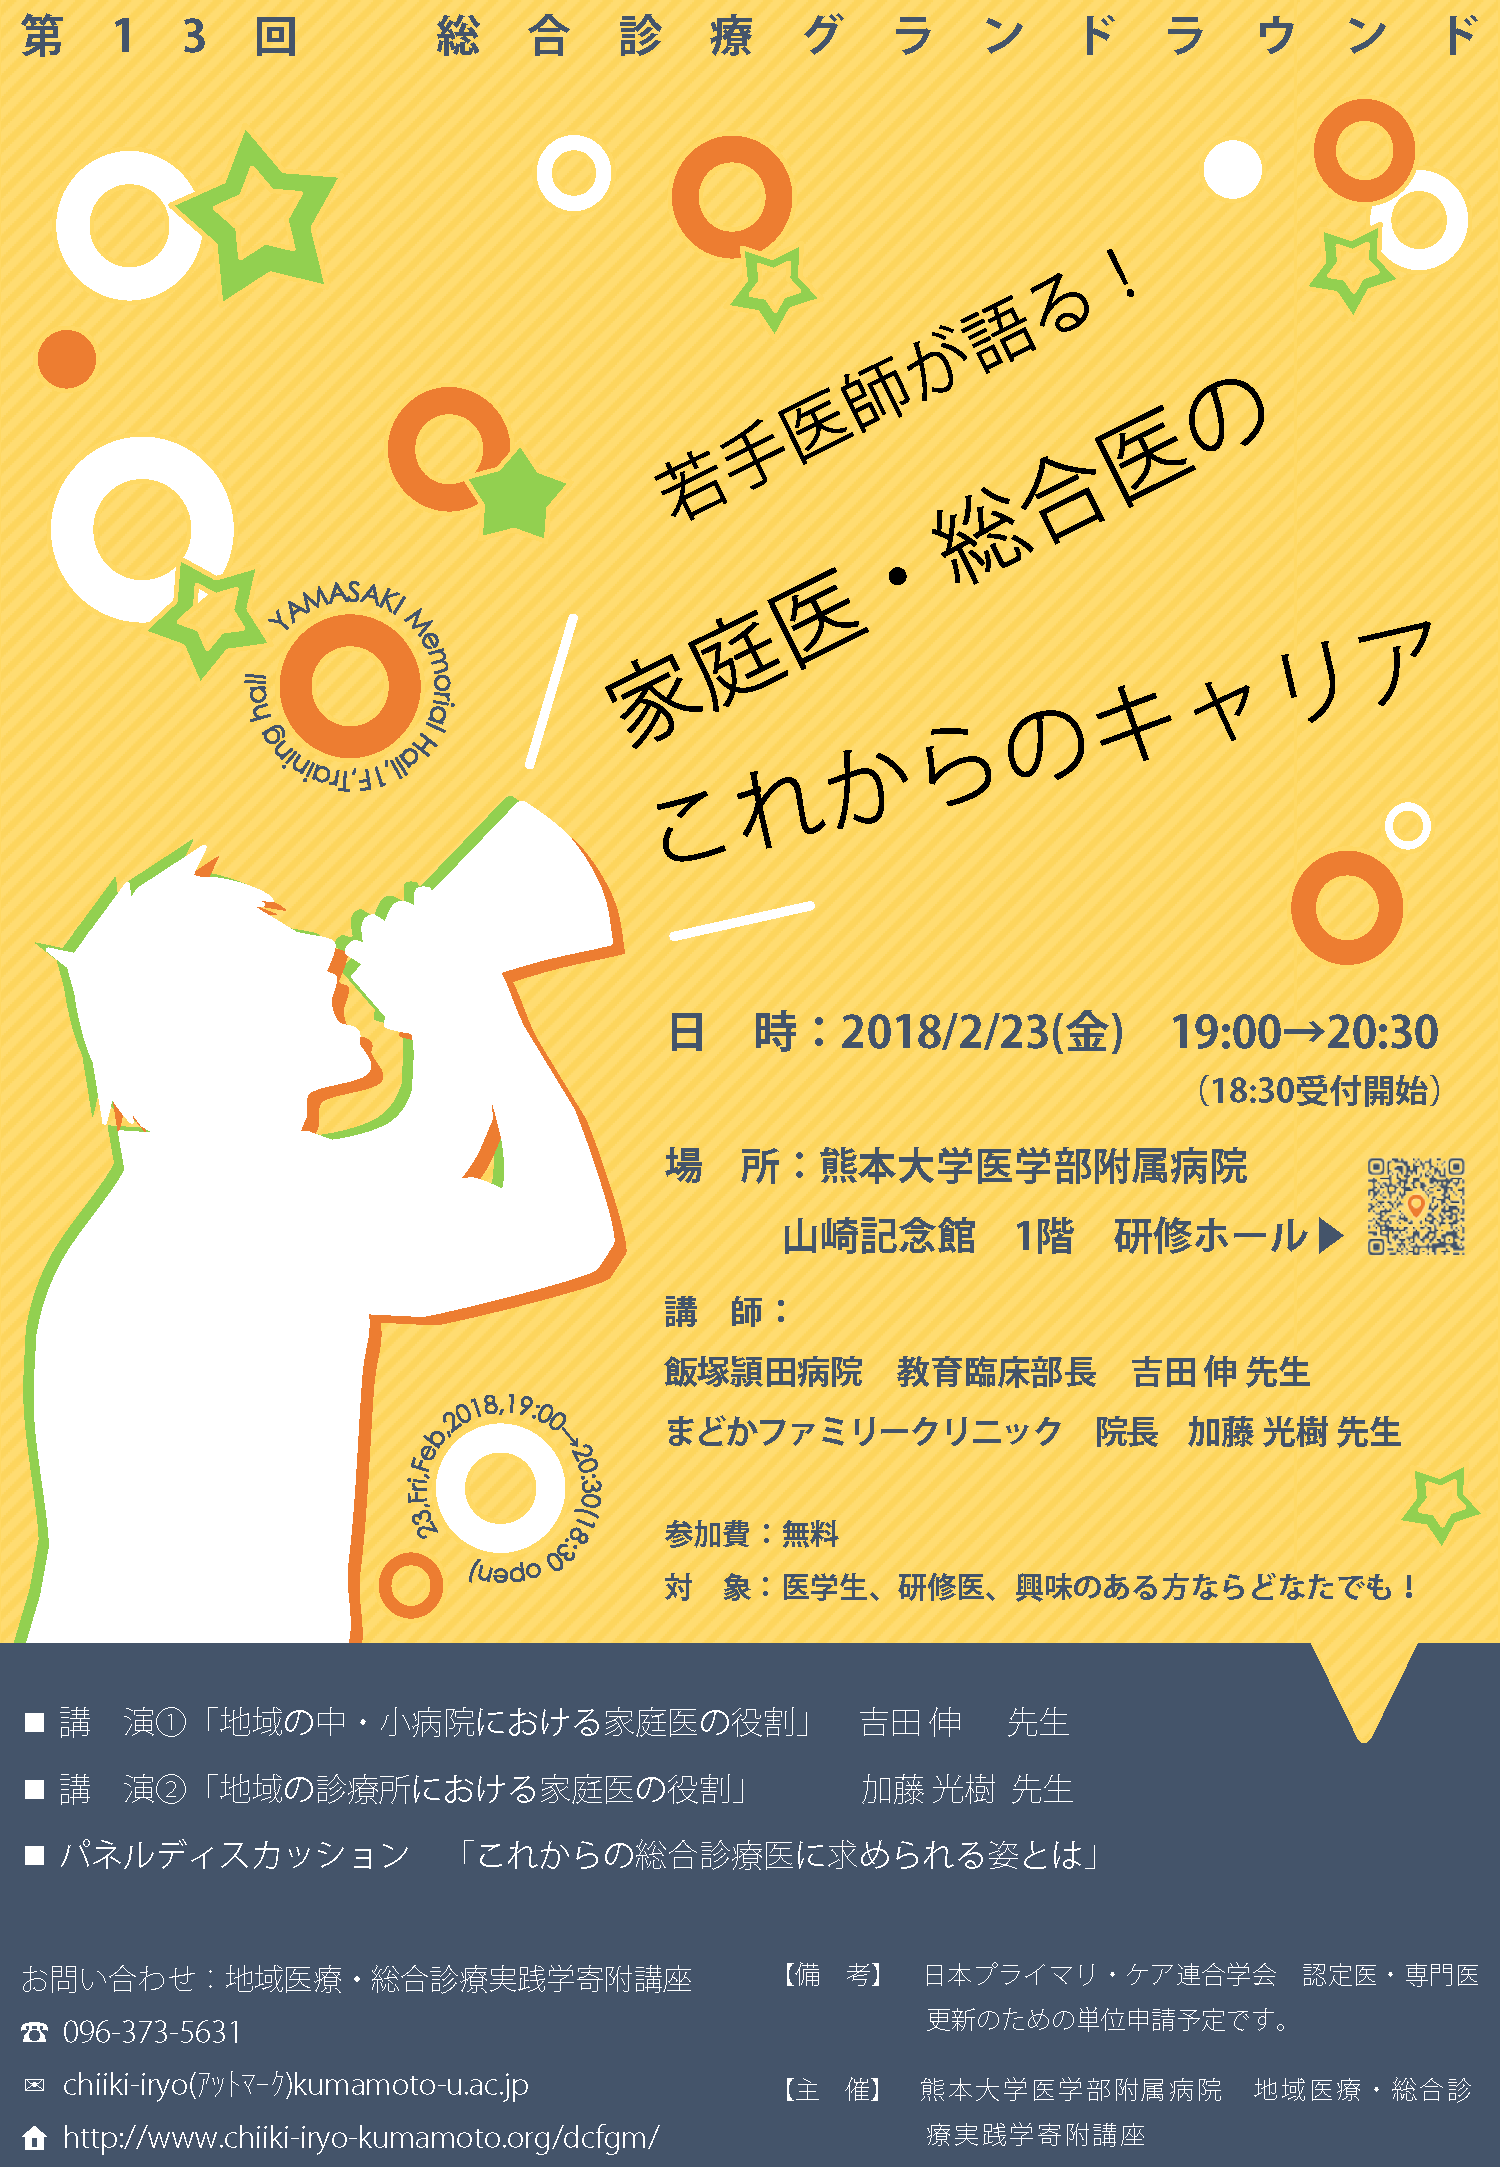 http://www.chiiki-iryo-kumamoto.org/dcfgm/instruction/seminar/images/20180223-poster.png